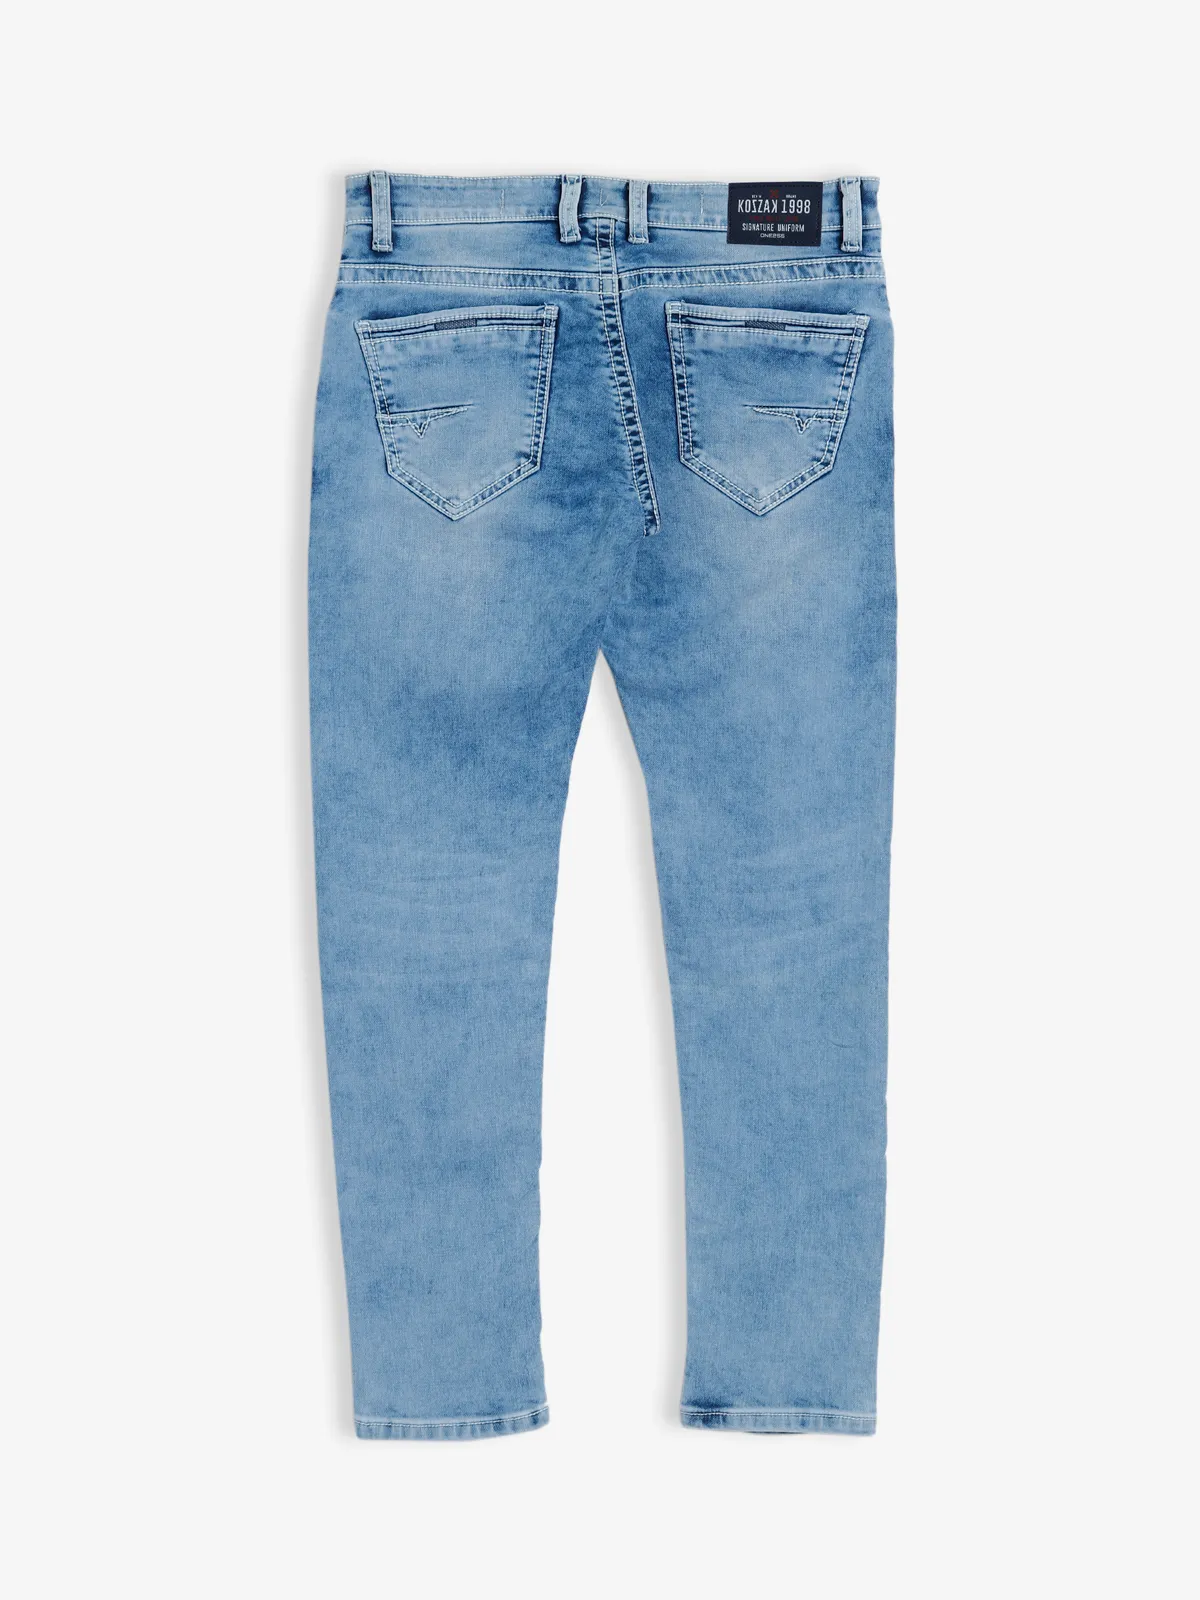 Kozzak washed light blue jeans